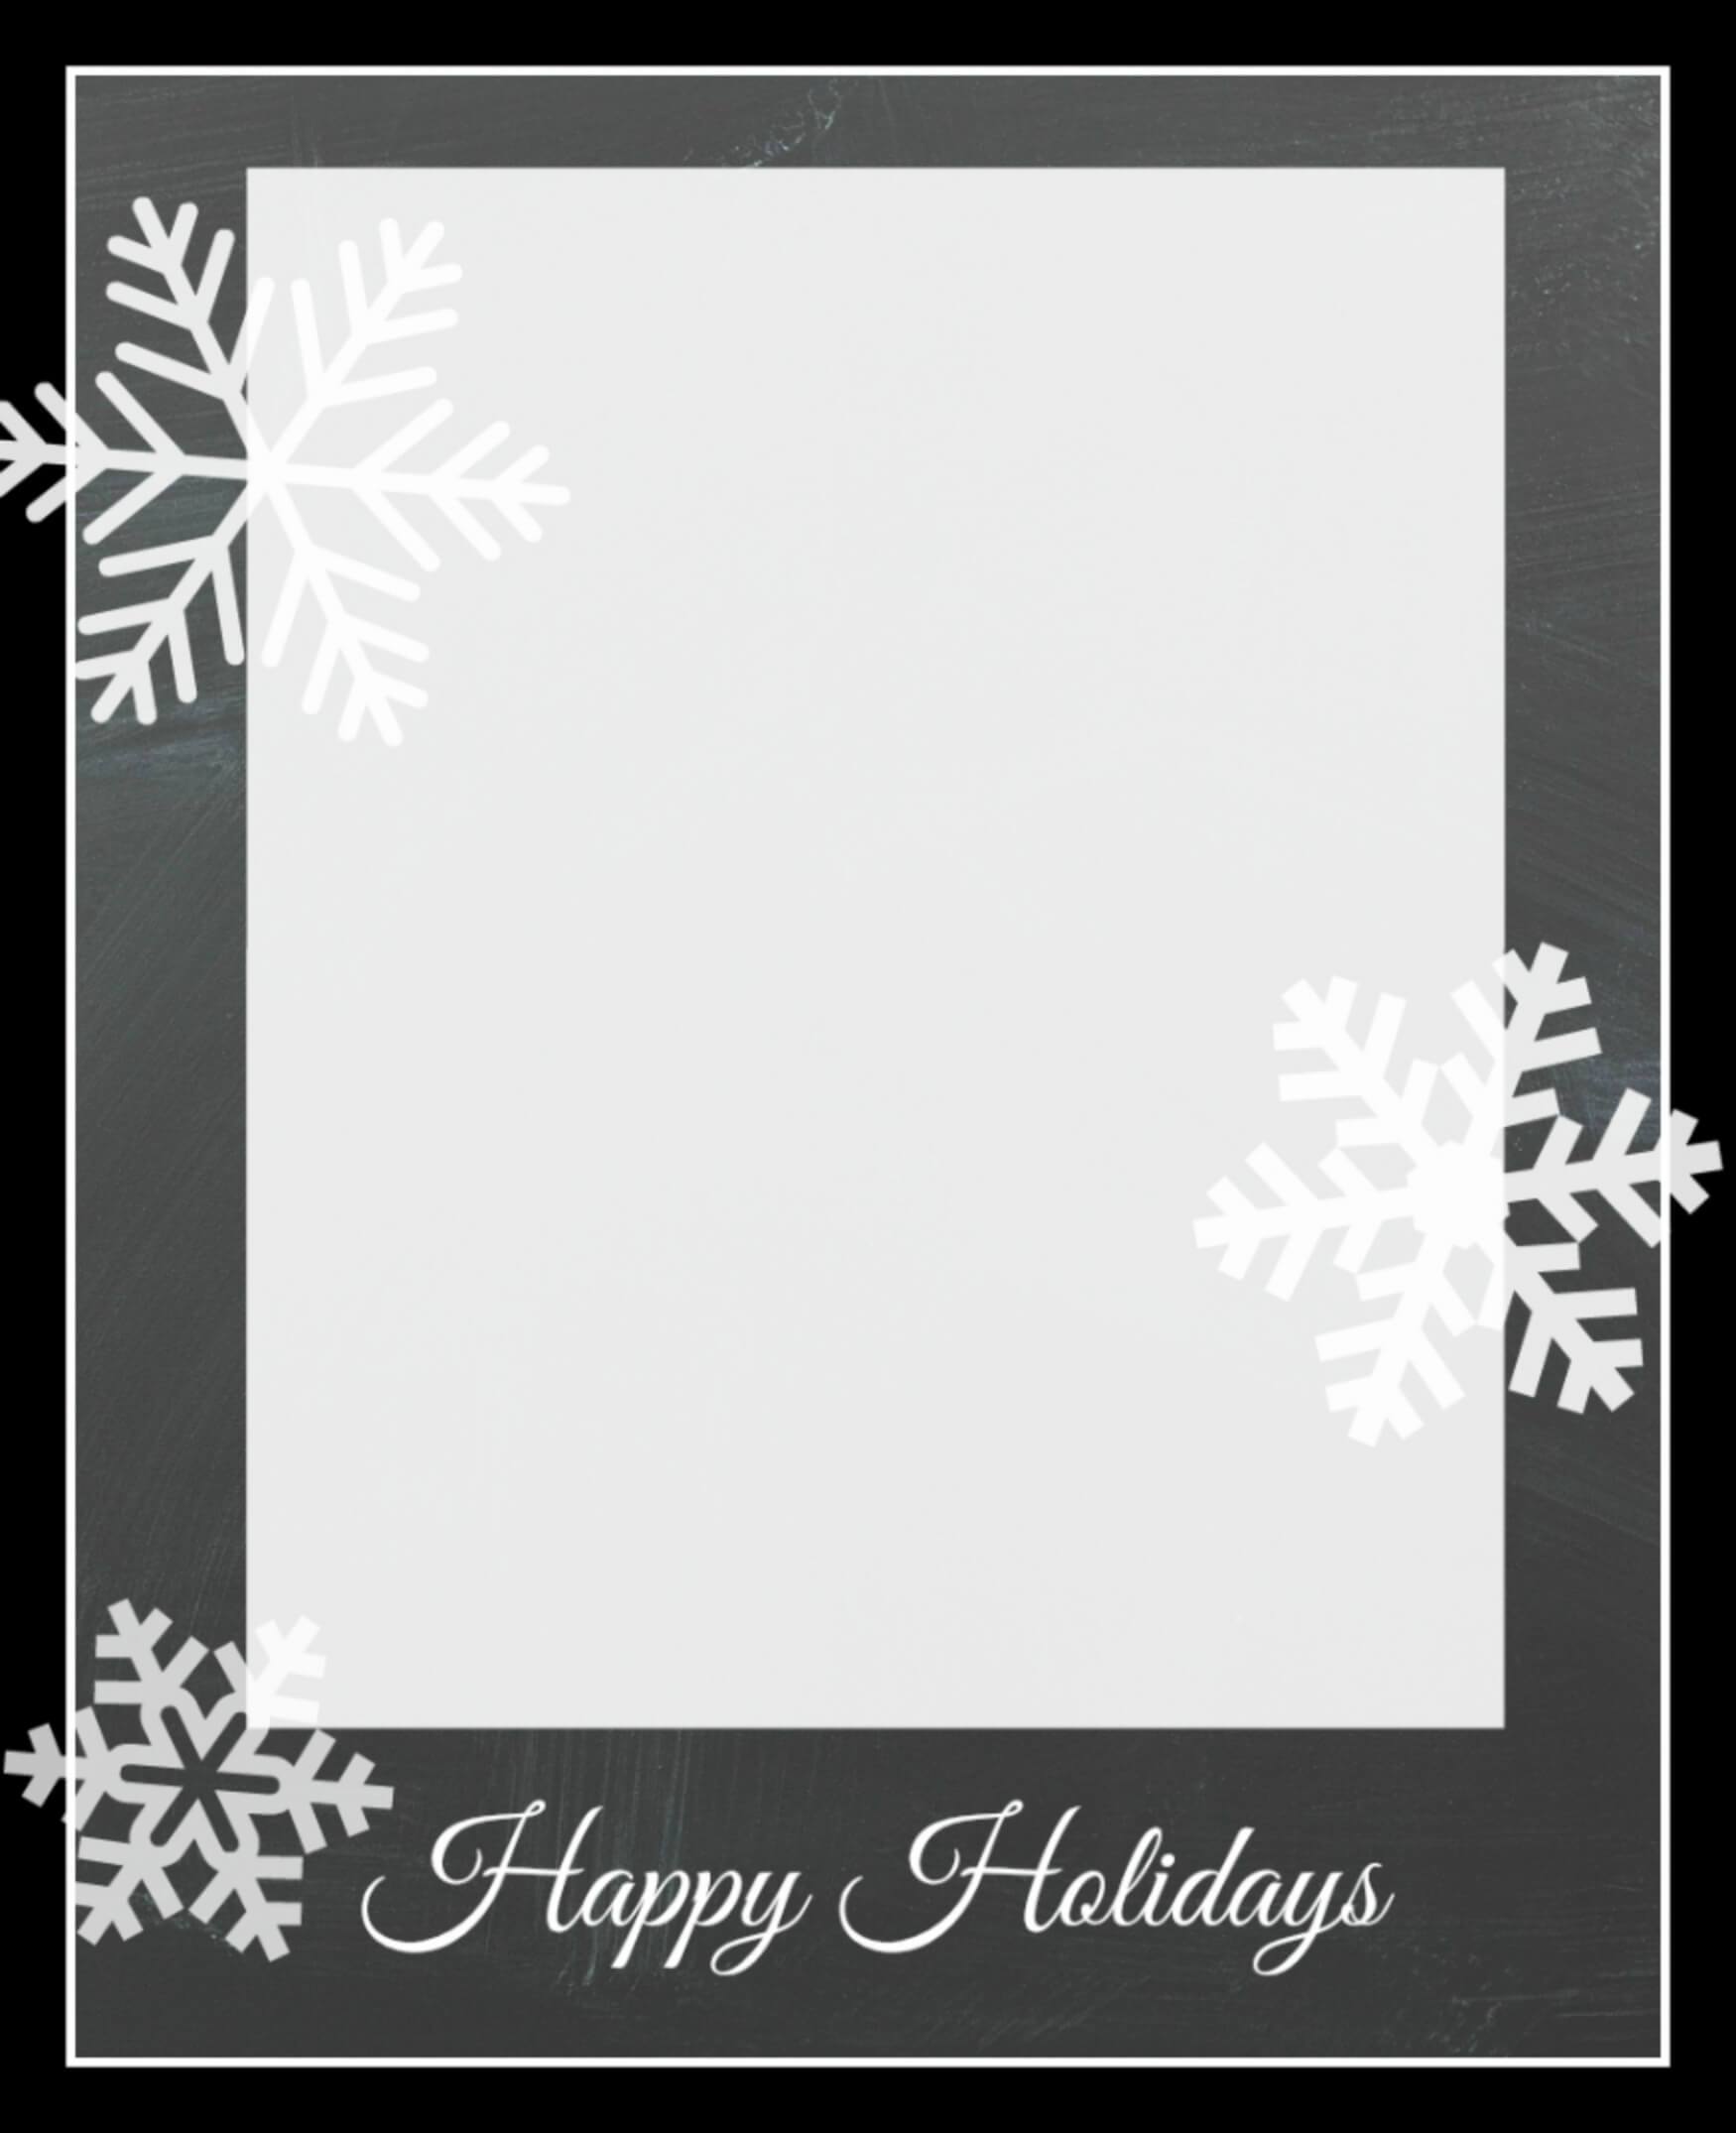 002 Snowflakecard3 Holiday Card Templates Free Template Intended For Free Holiday Photo Card Templates